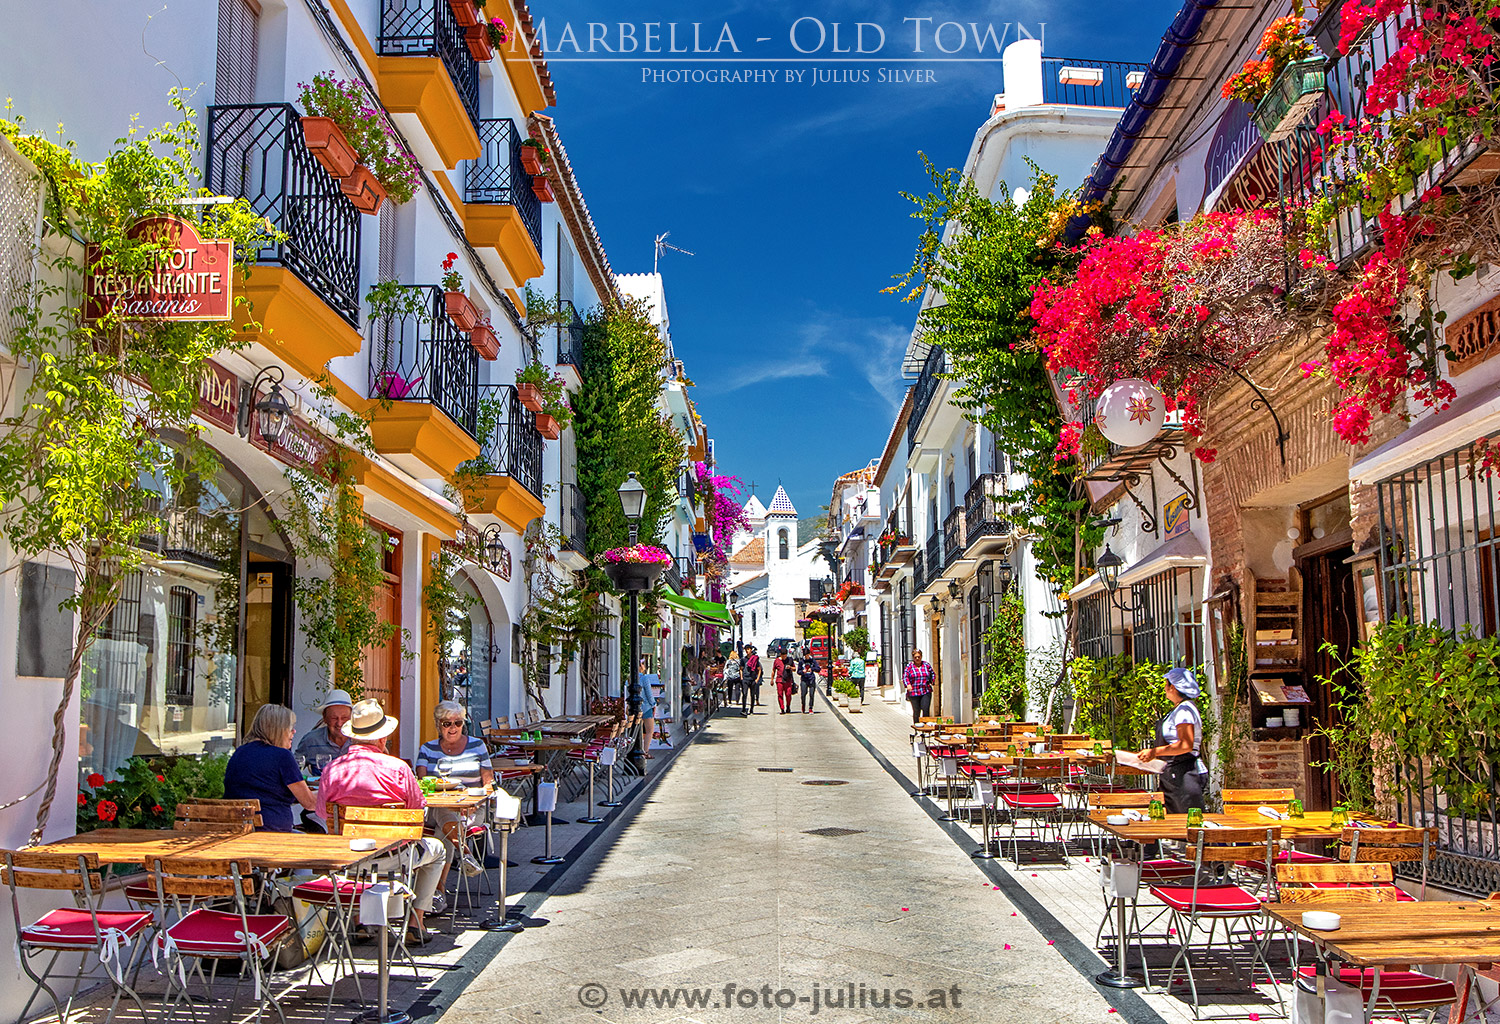 143a_Marbella_Old_Town.jpg, 963kB